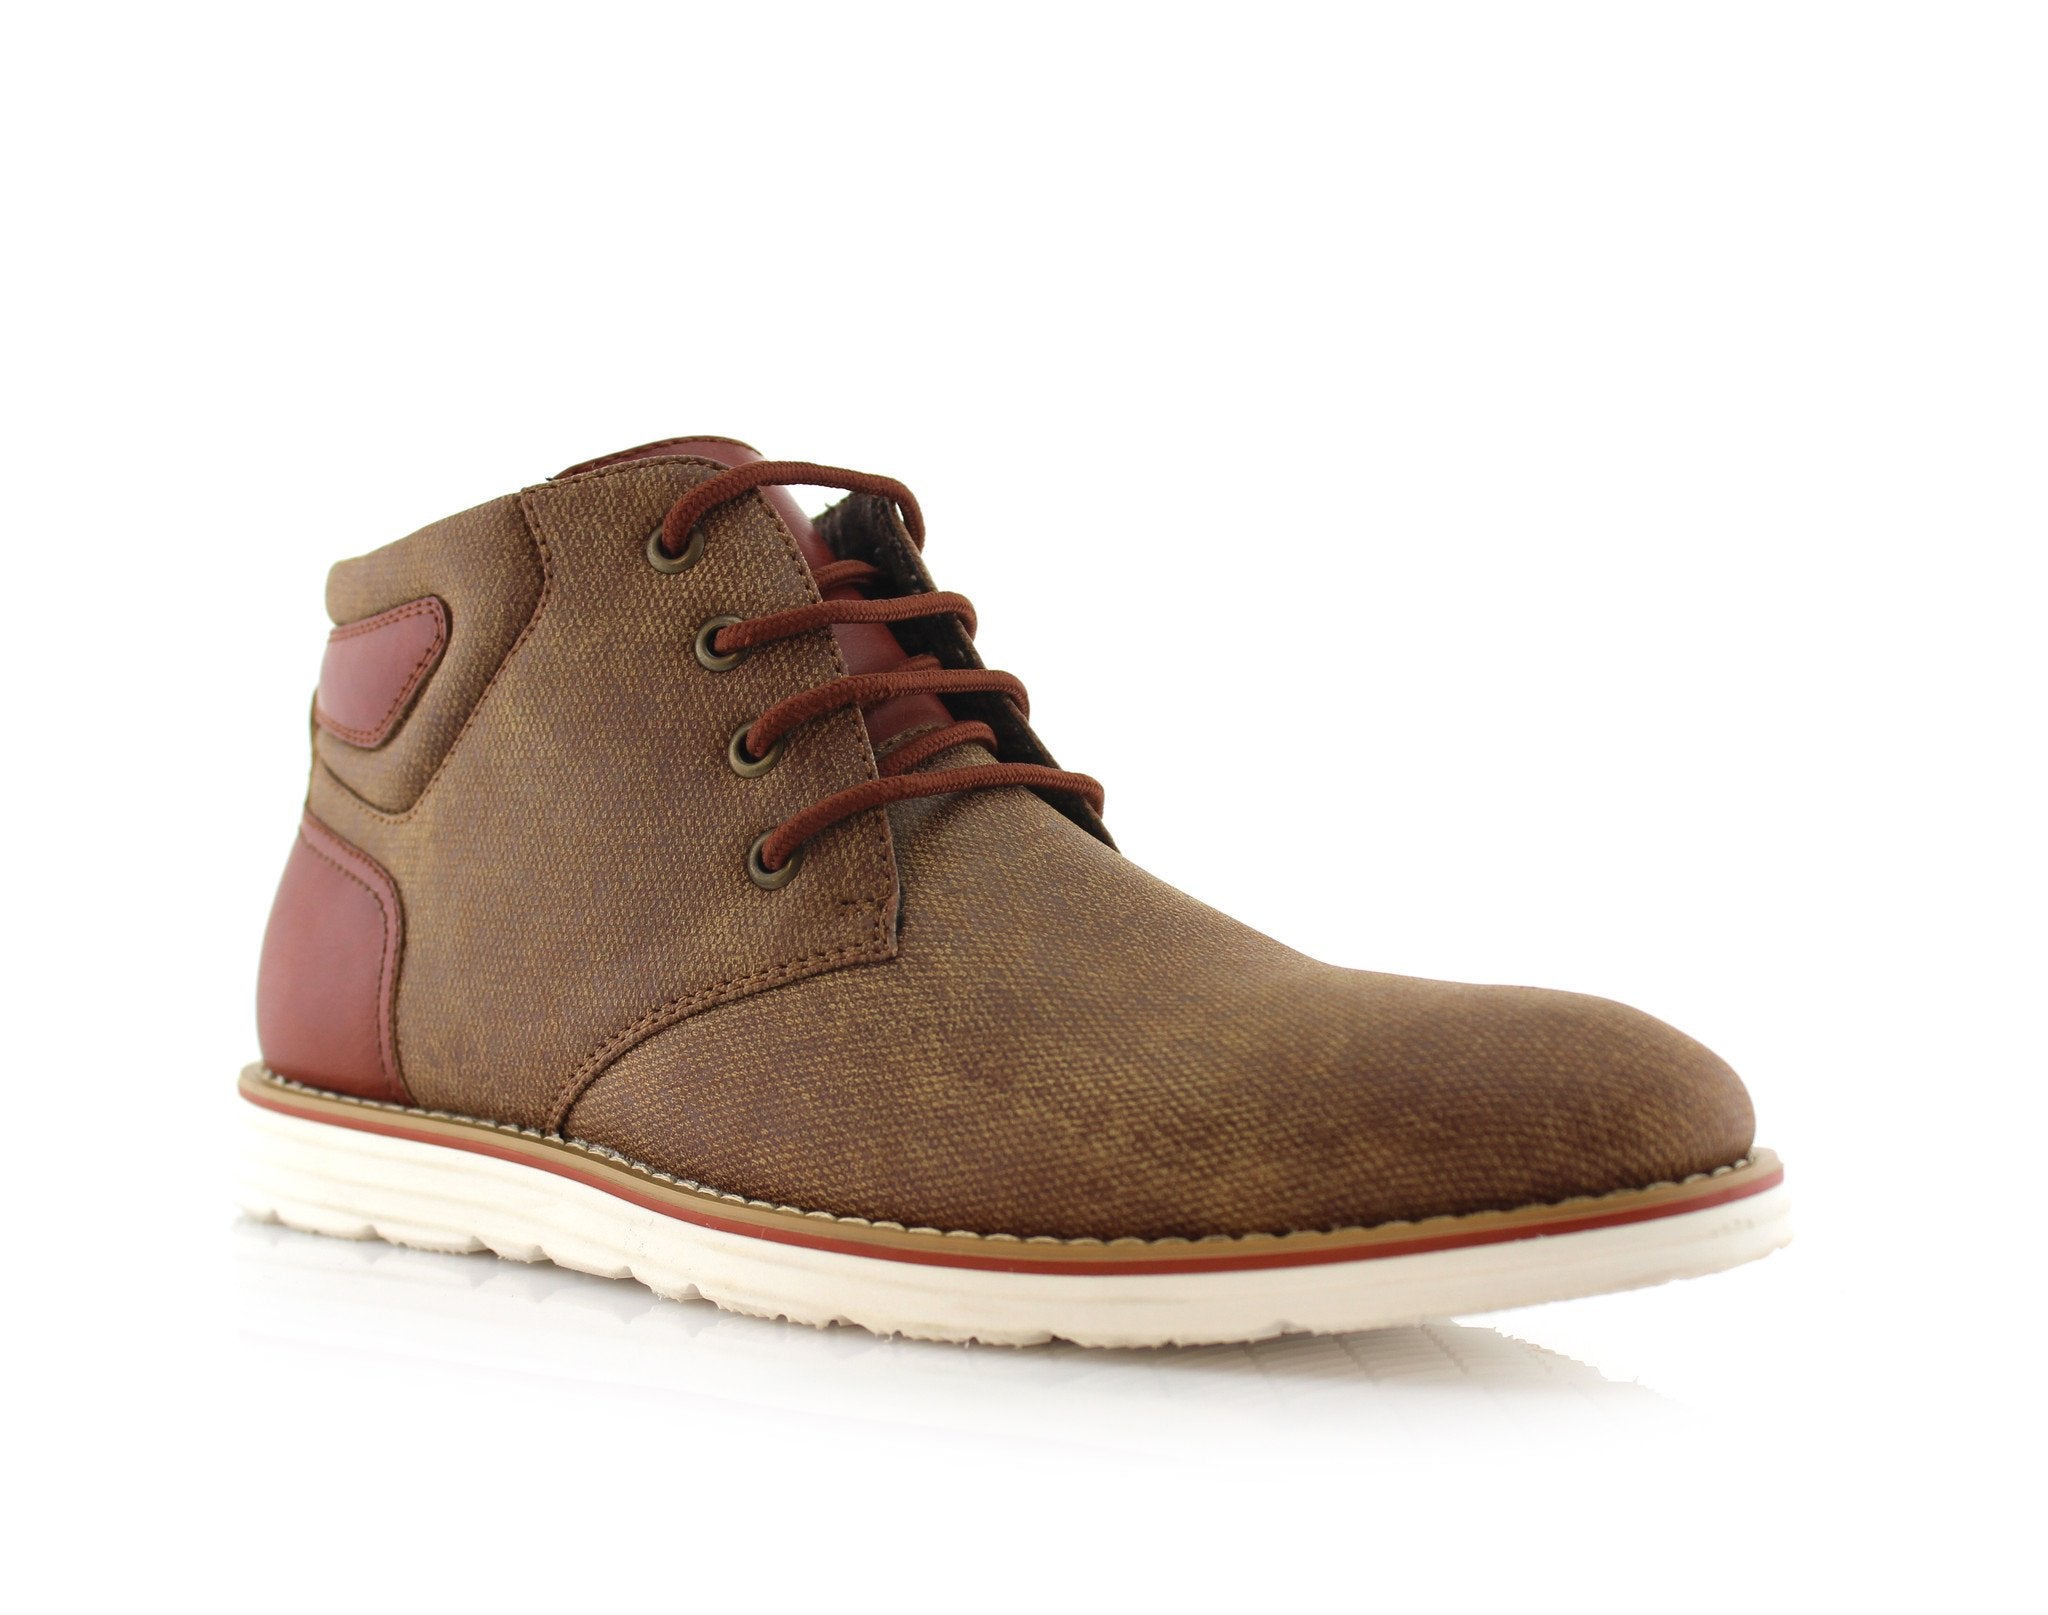 Two-Toned Chukka Sneaker Boots | Owen by Ferro Aldo | Conal Footwear | Main Angle View